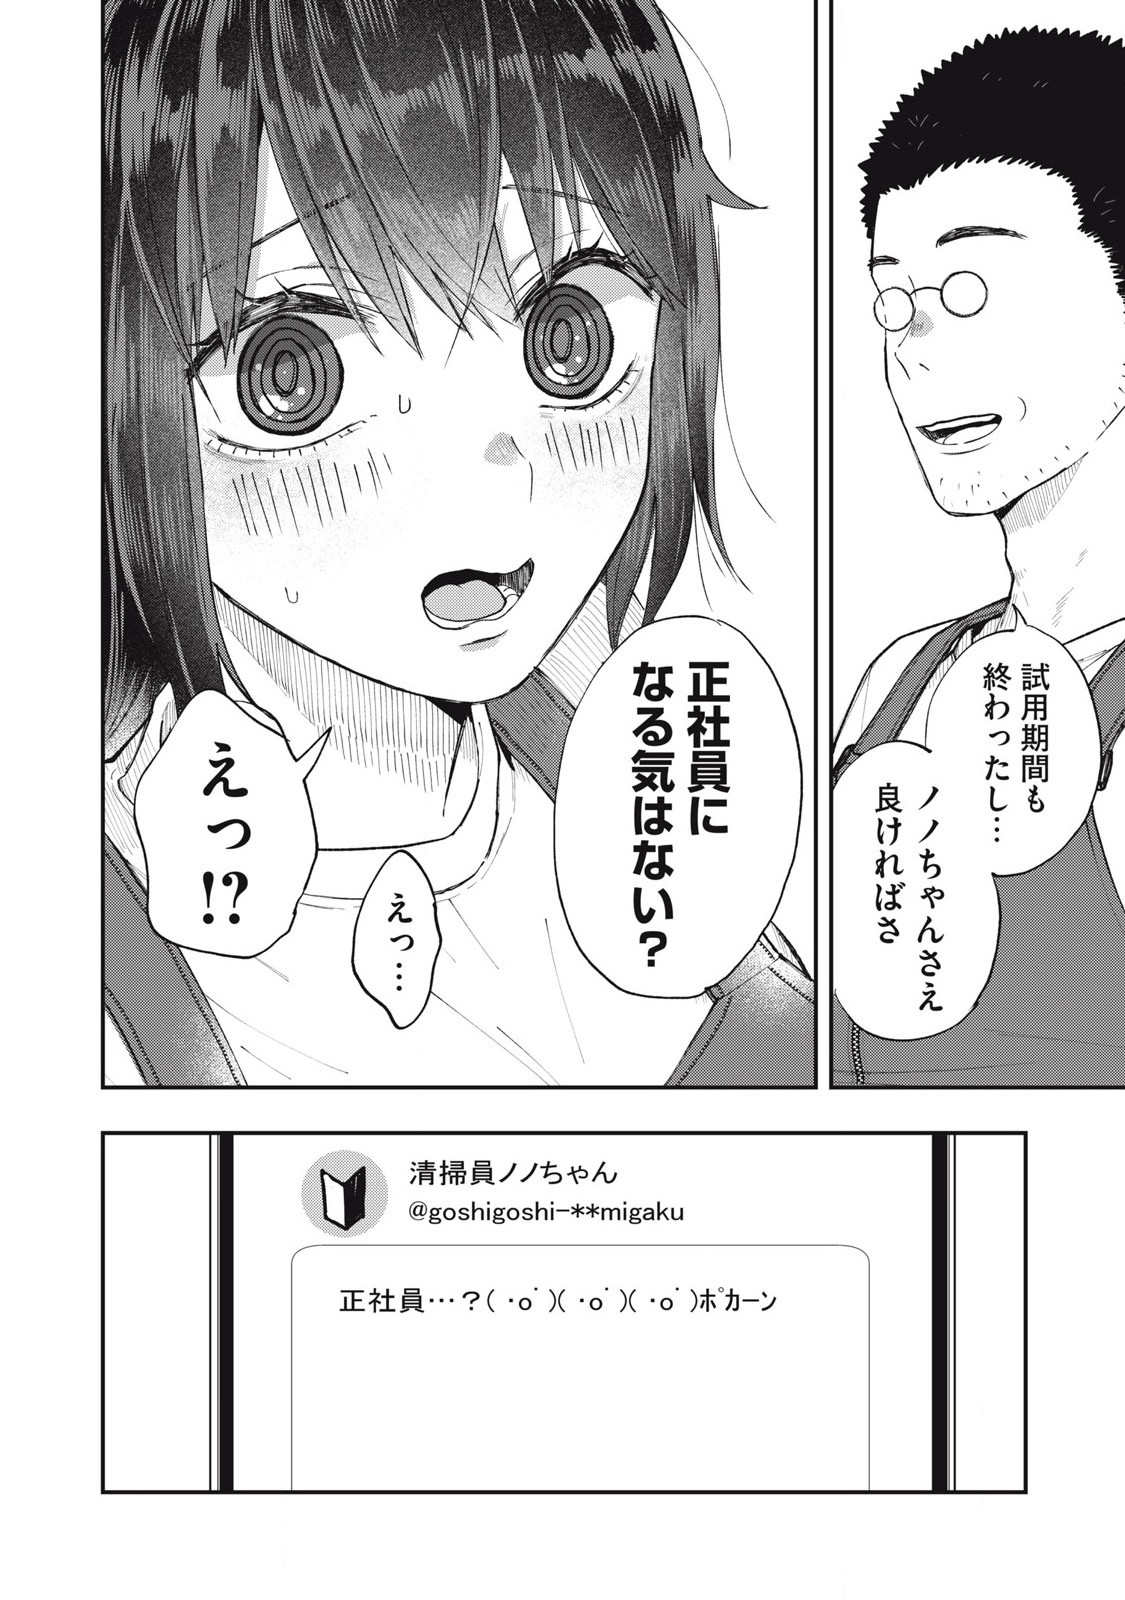 Seisouin Nono-chan Kyou no Tsubuyaki - Chapter 4 - Page 12